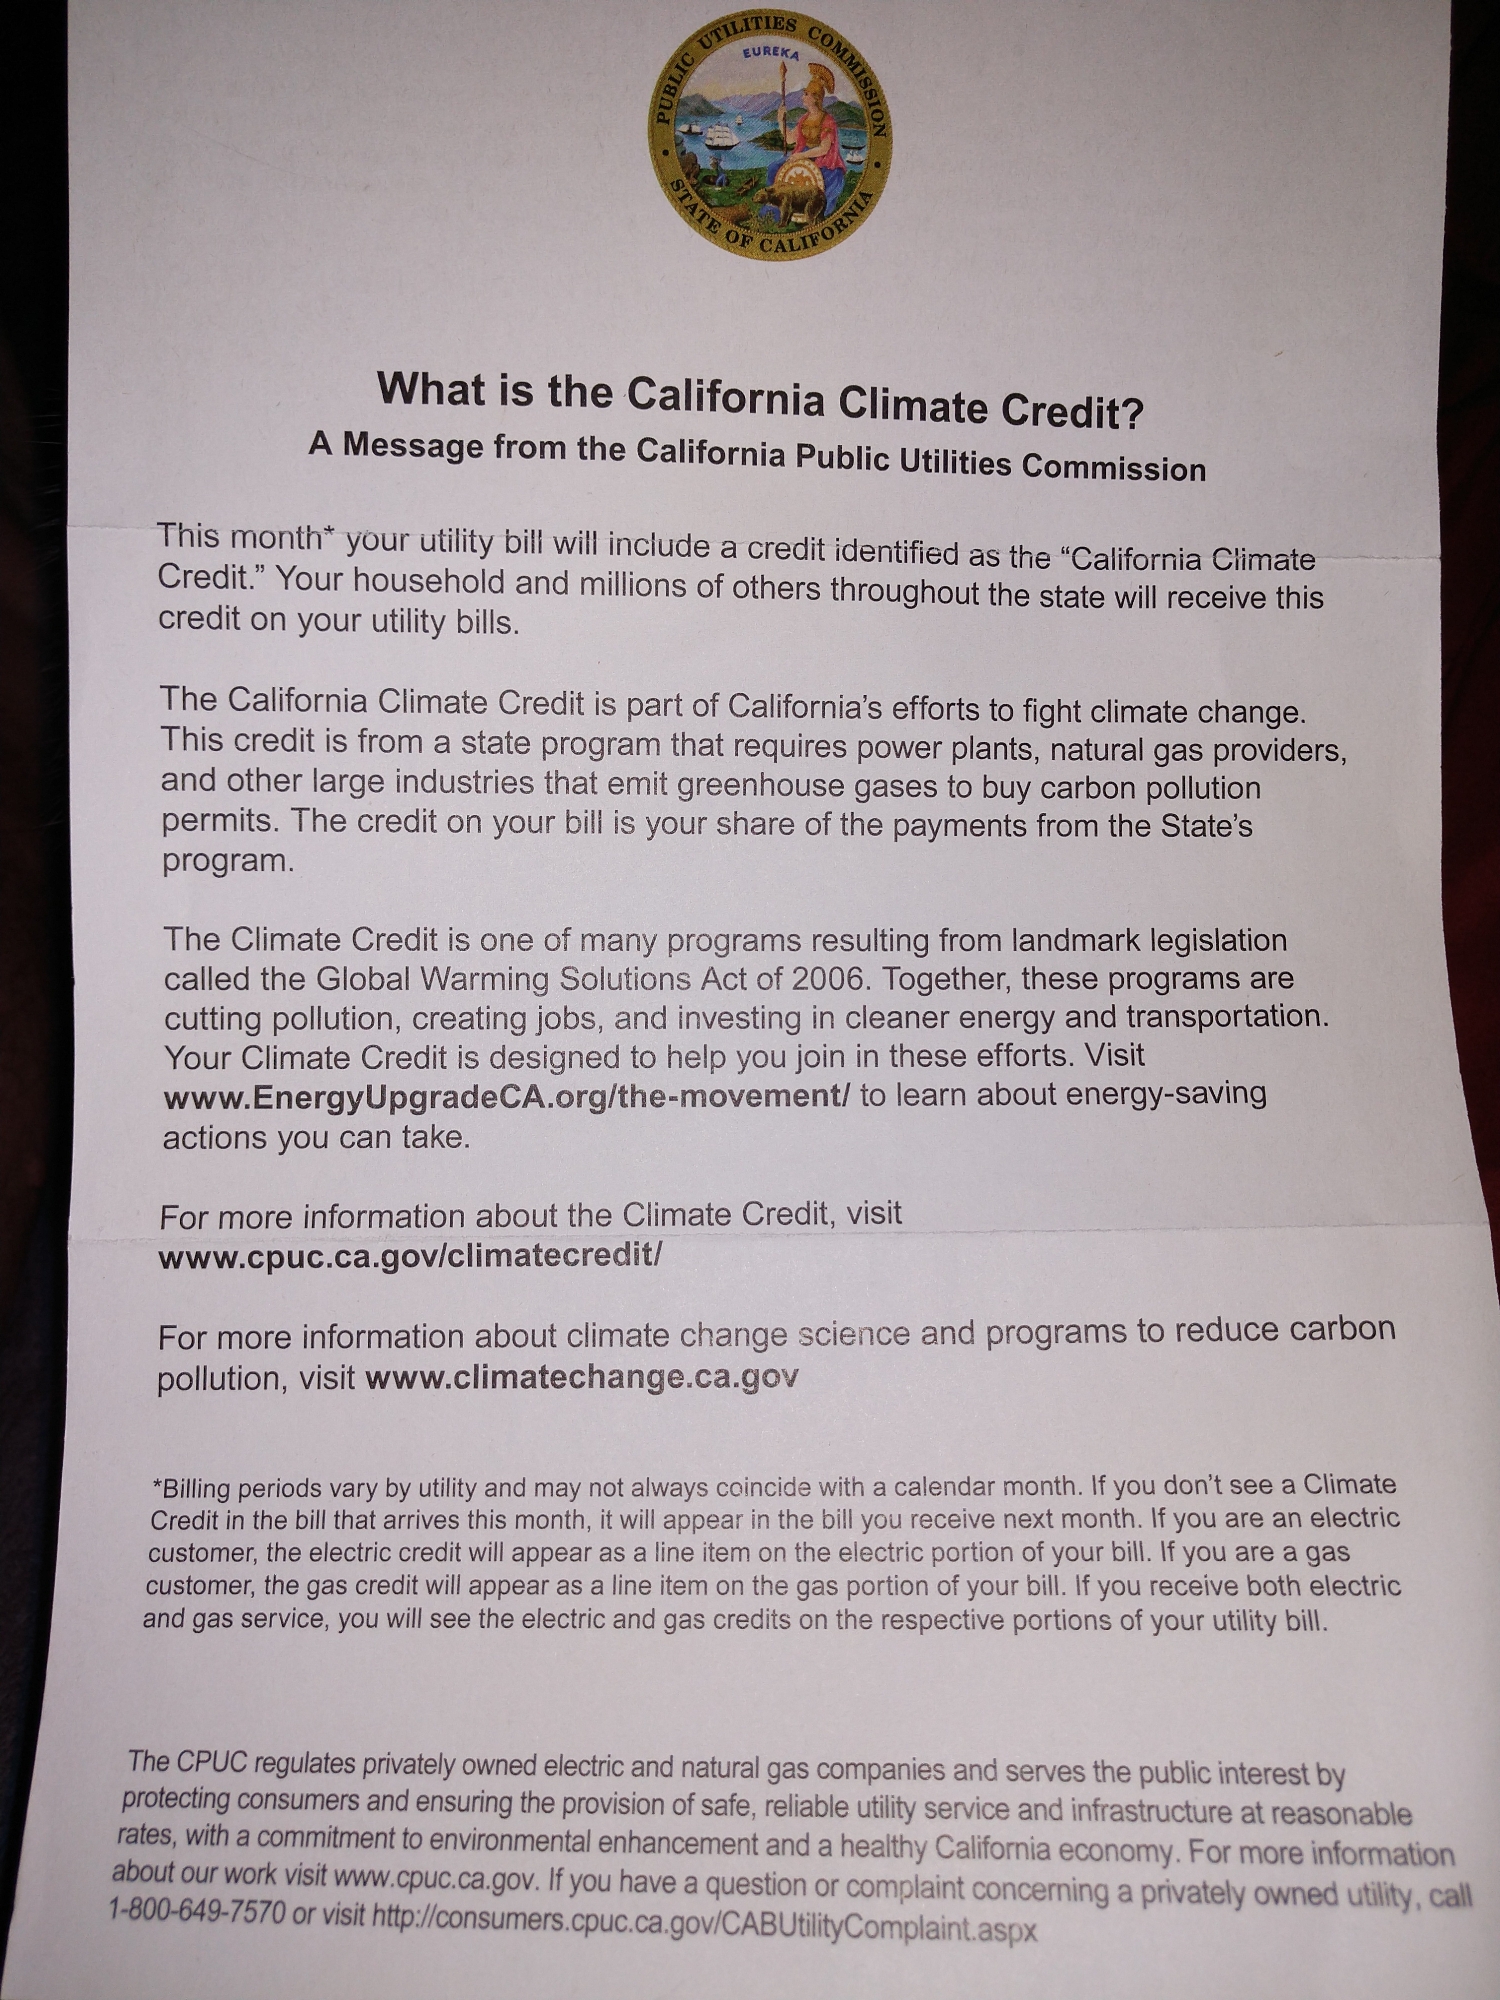 CaliforniaClimateCredit.jpg